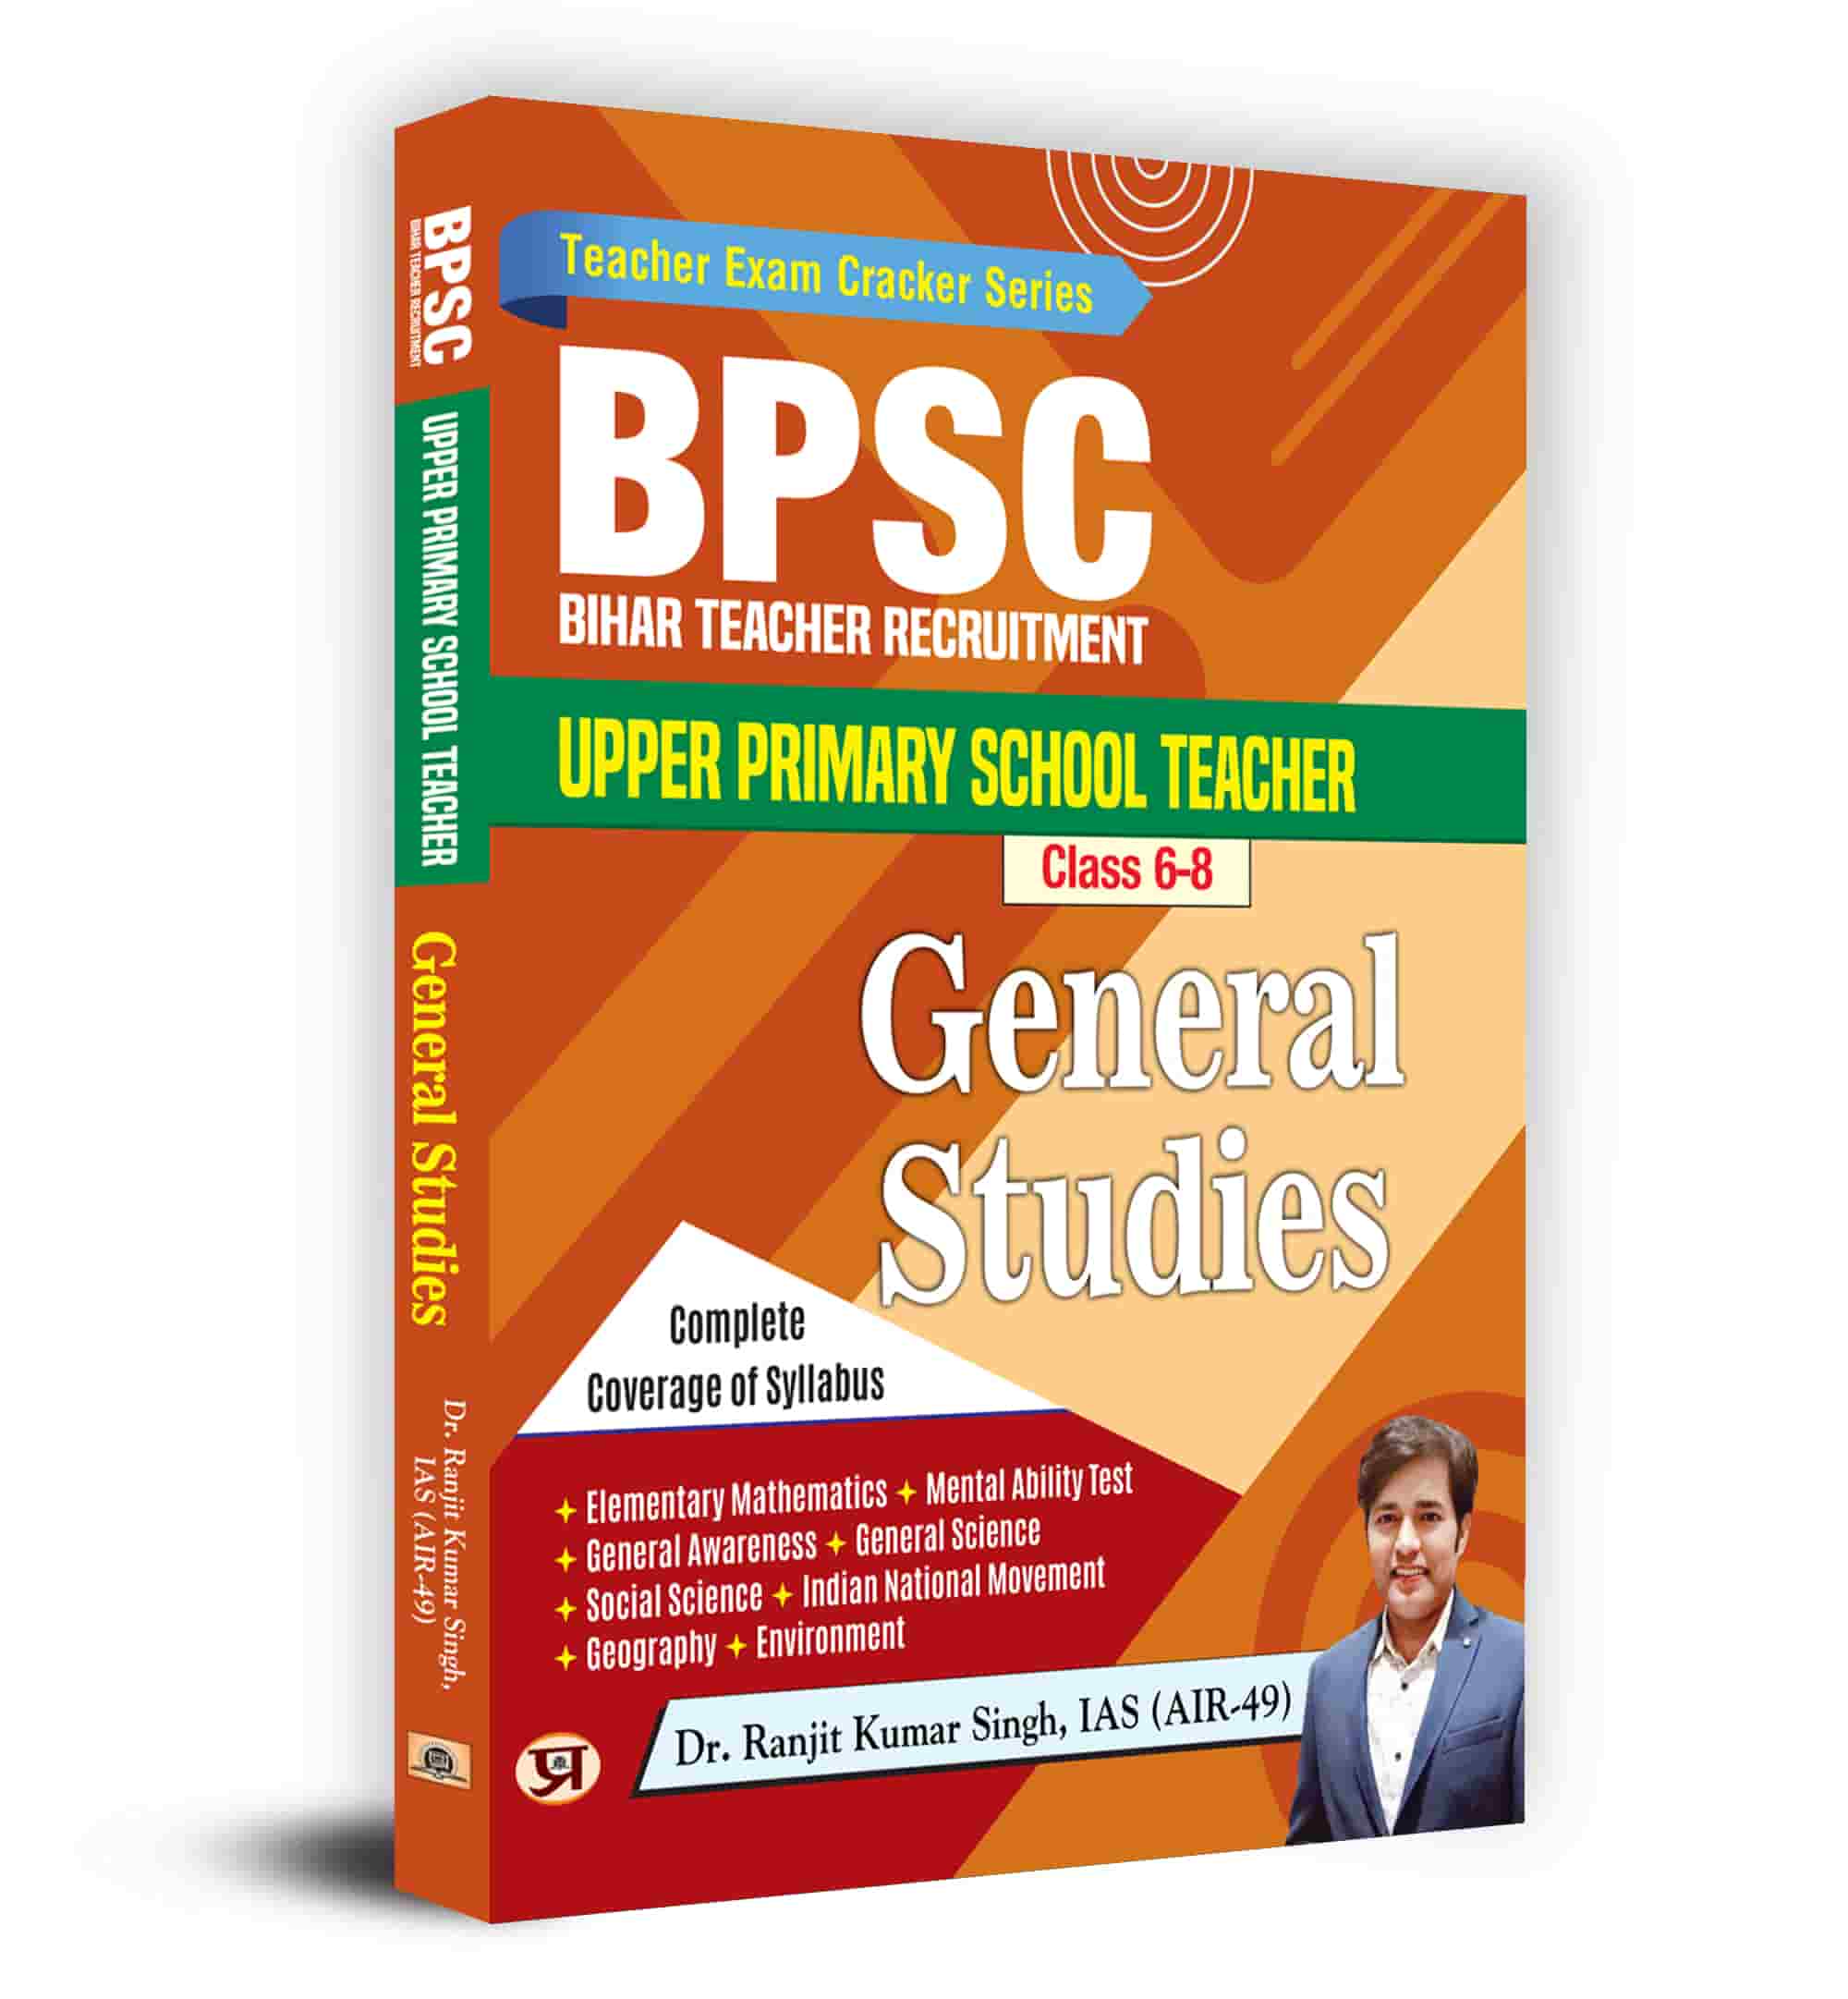 BPSC Bihar Teacher Recruitment Upper Primary School Teacher Class 6-8 General Studies 2023 Study Guide in English